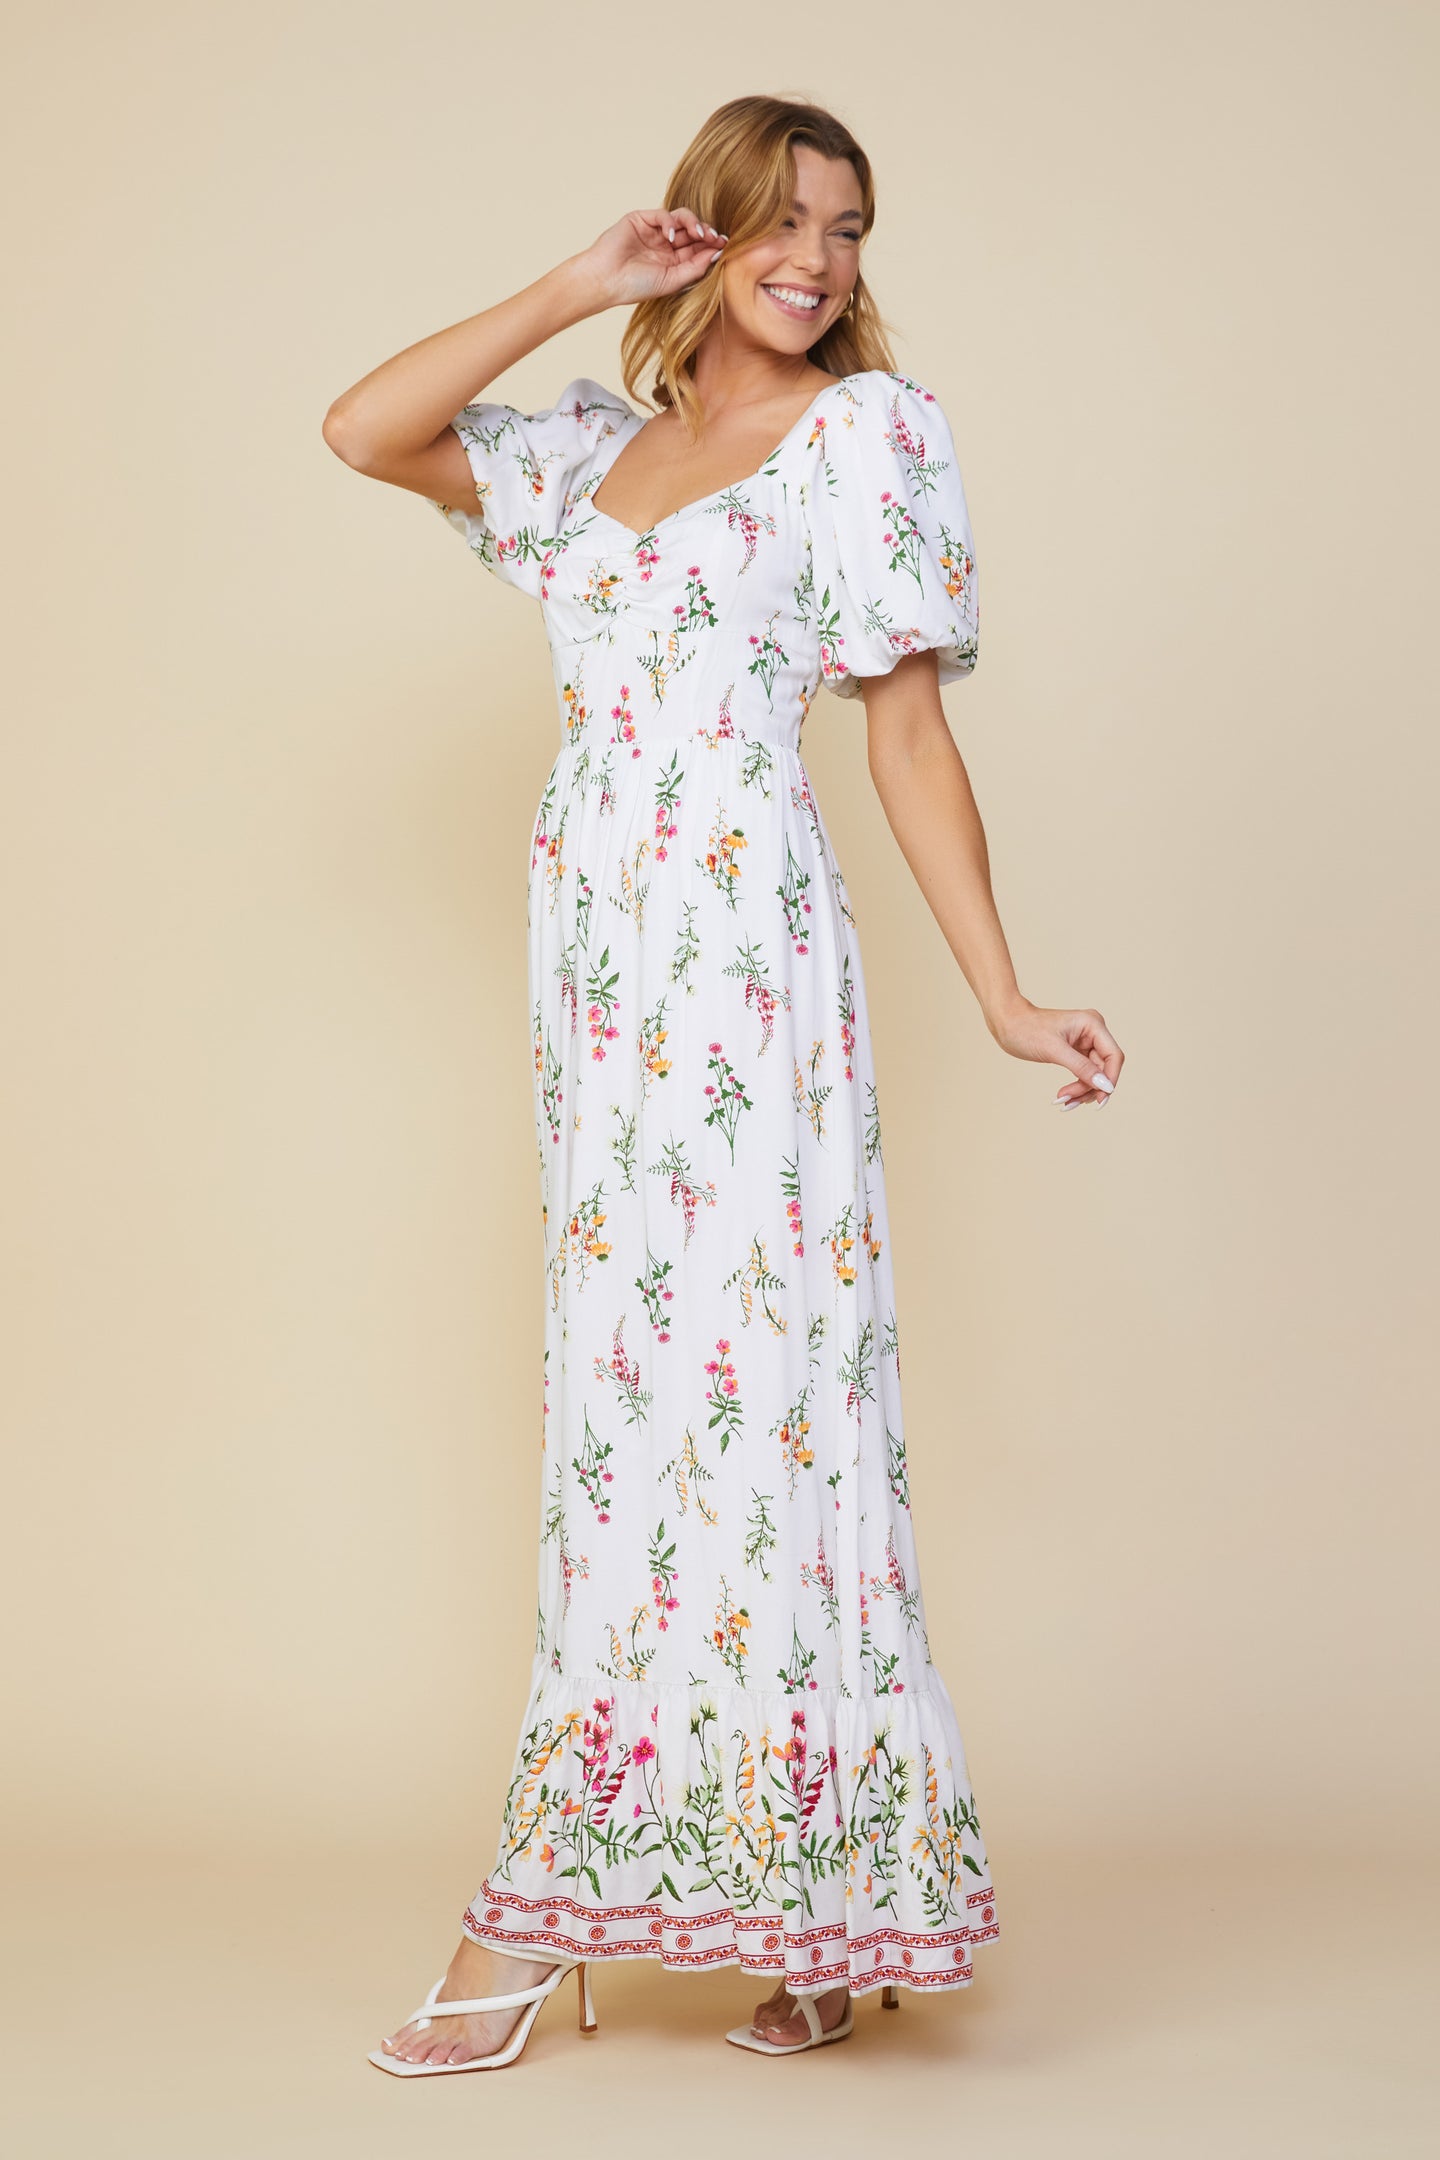 Lexie Floral Border Print Dress